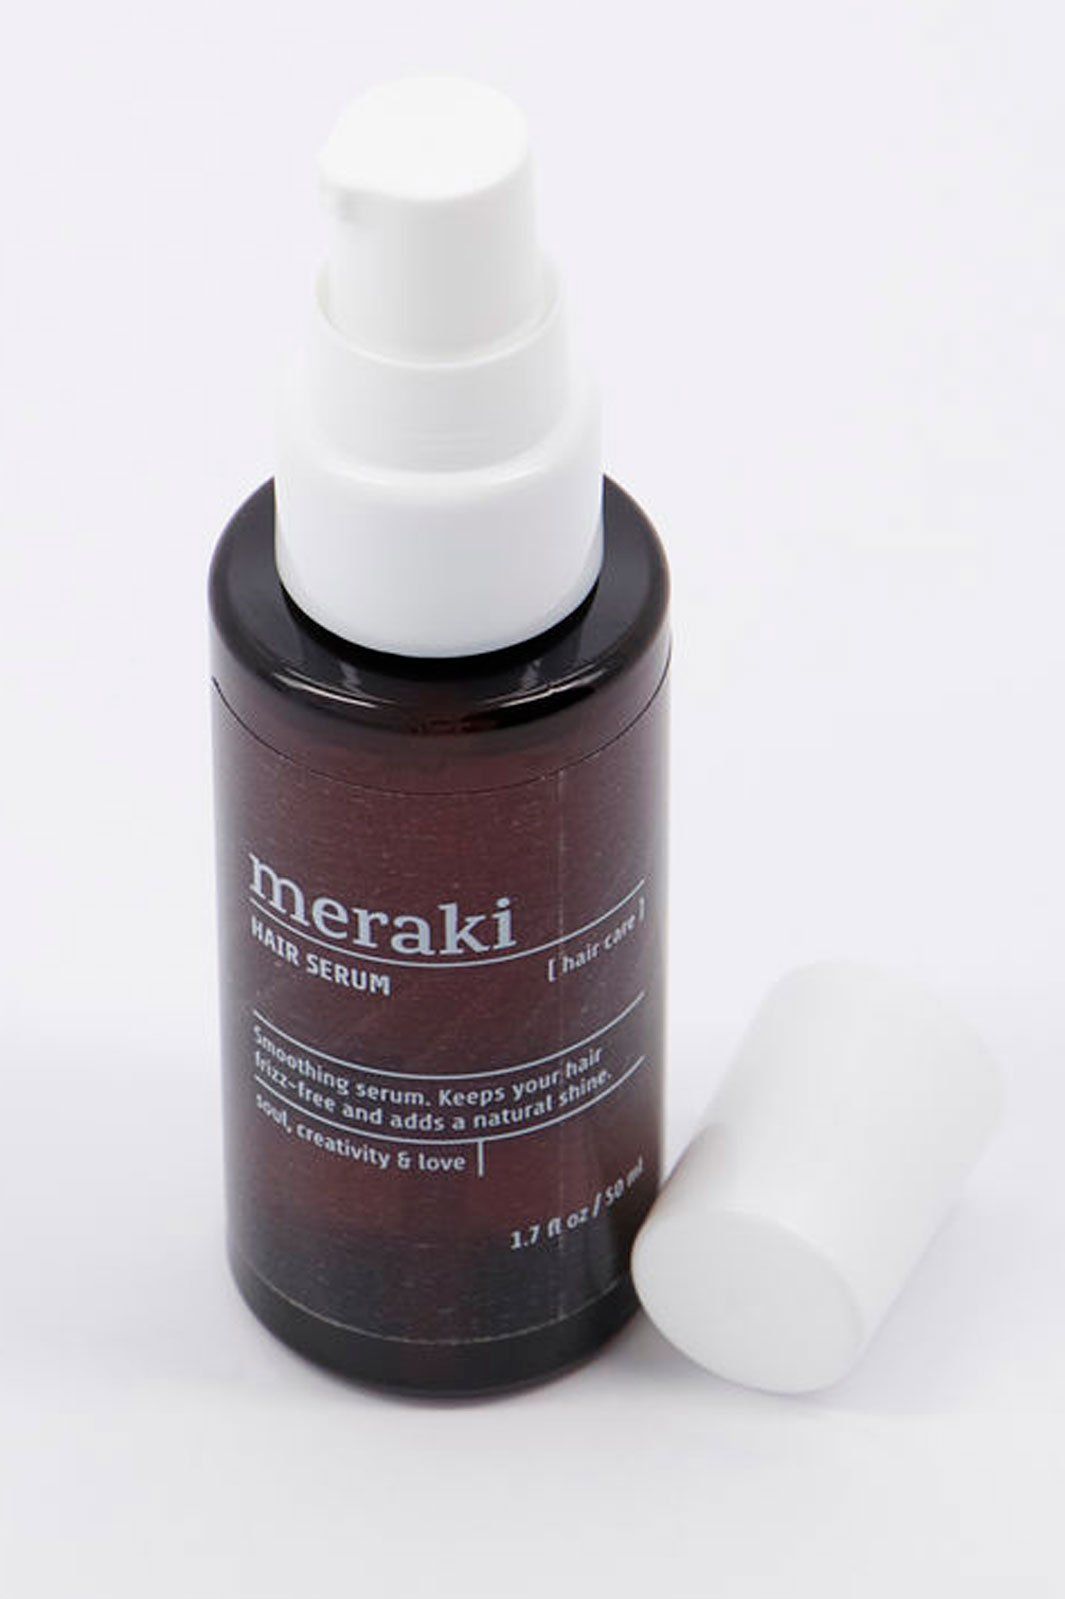 Meraki - Hair Serum Tilbehør 